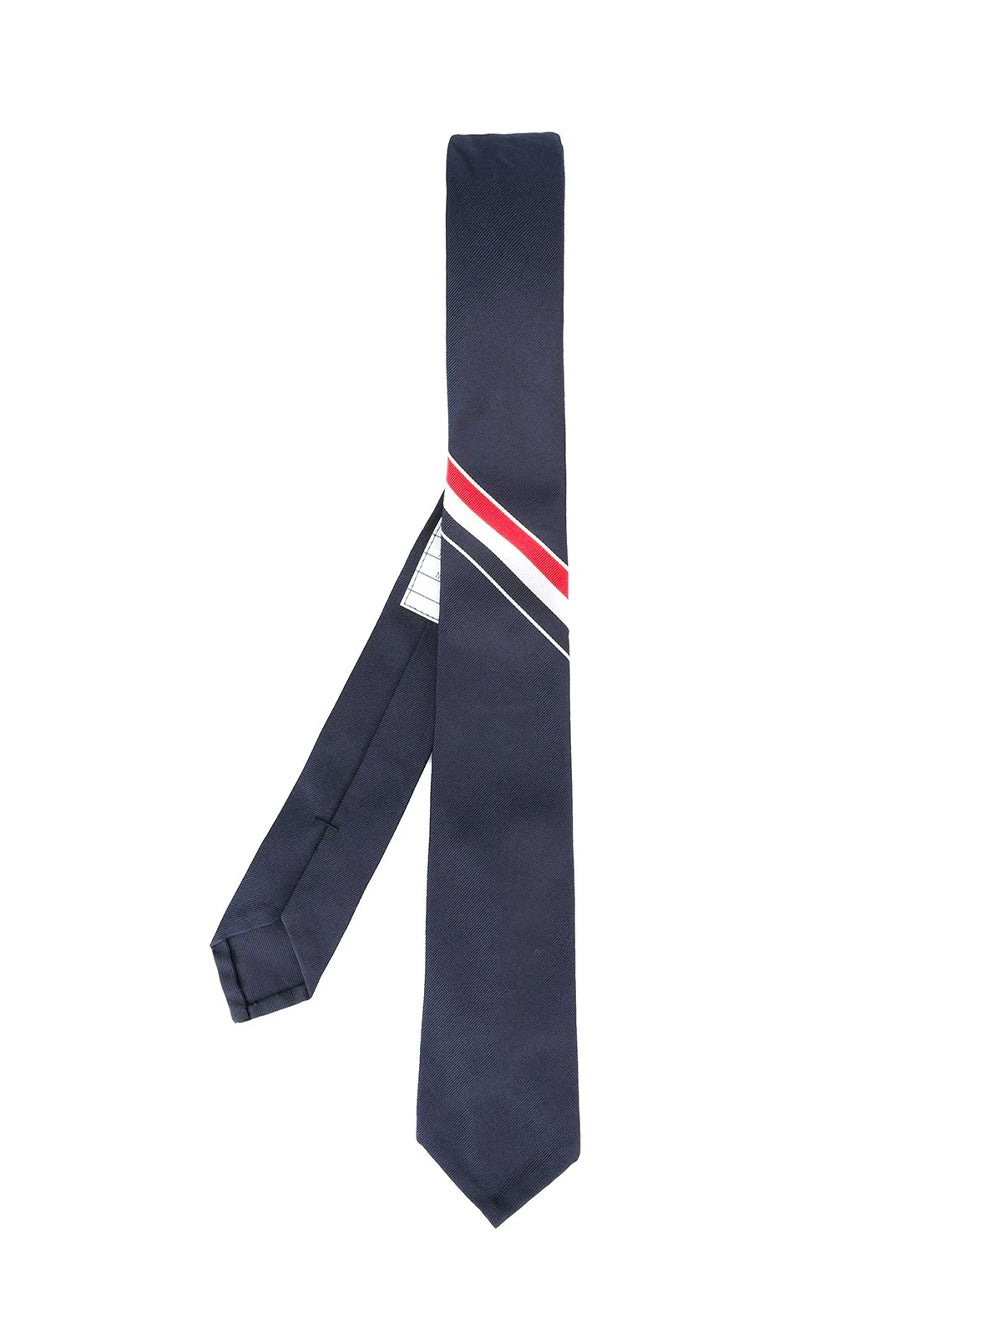 Grosgrain Stripe Tie (Navy)